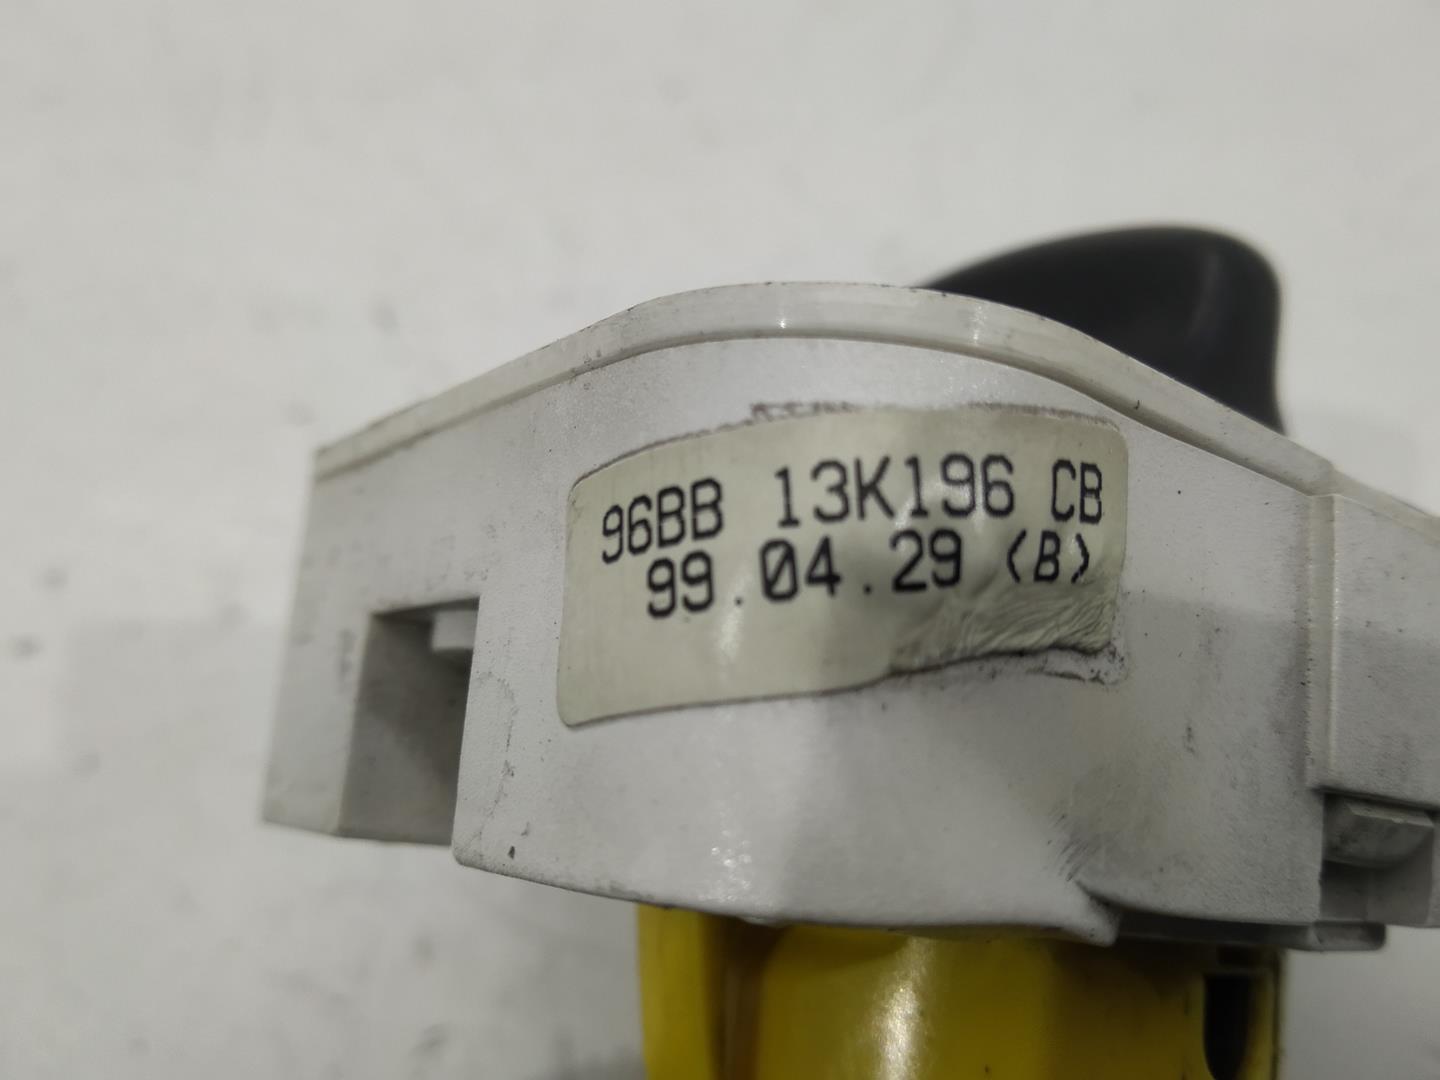 FORD Mondeo 2 generation (1996-2000) Headlight Switch Control Unit 96BB13K196CB, 96BB13K196CB, 96BB13K196CB 24512585